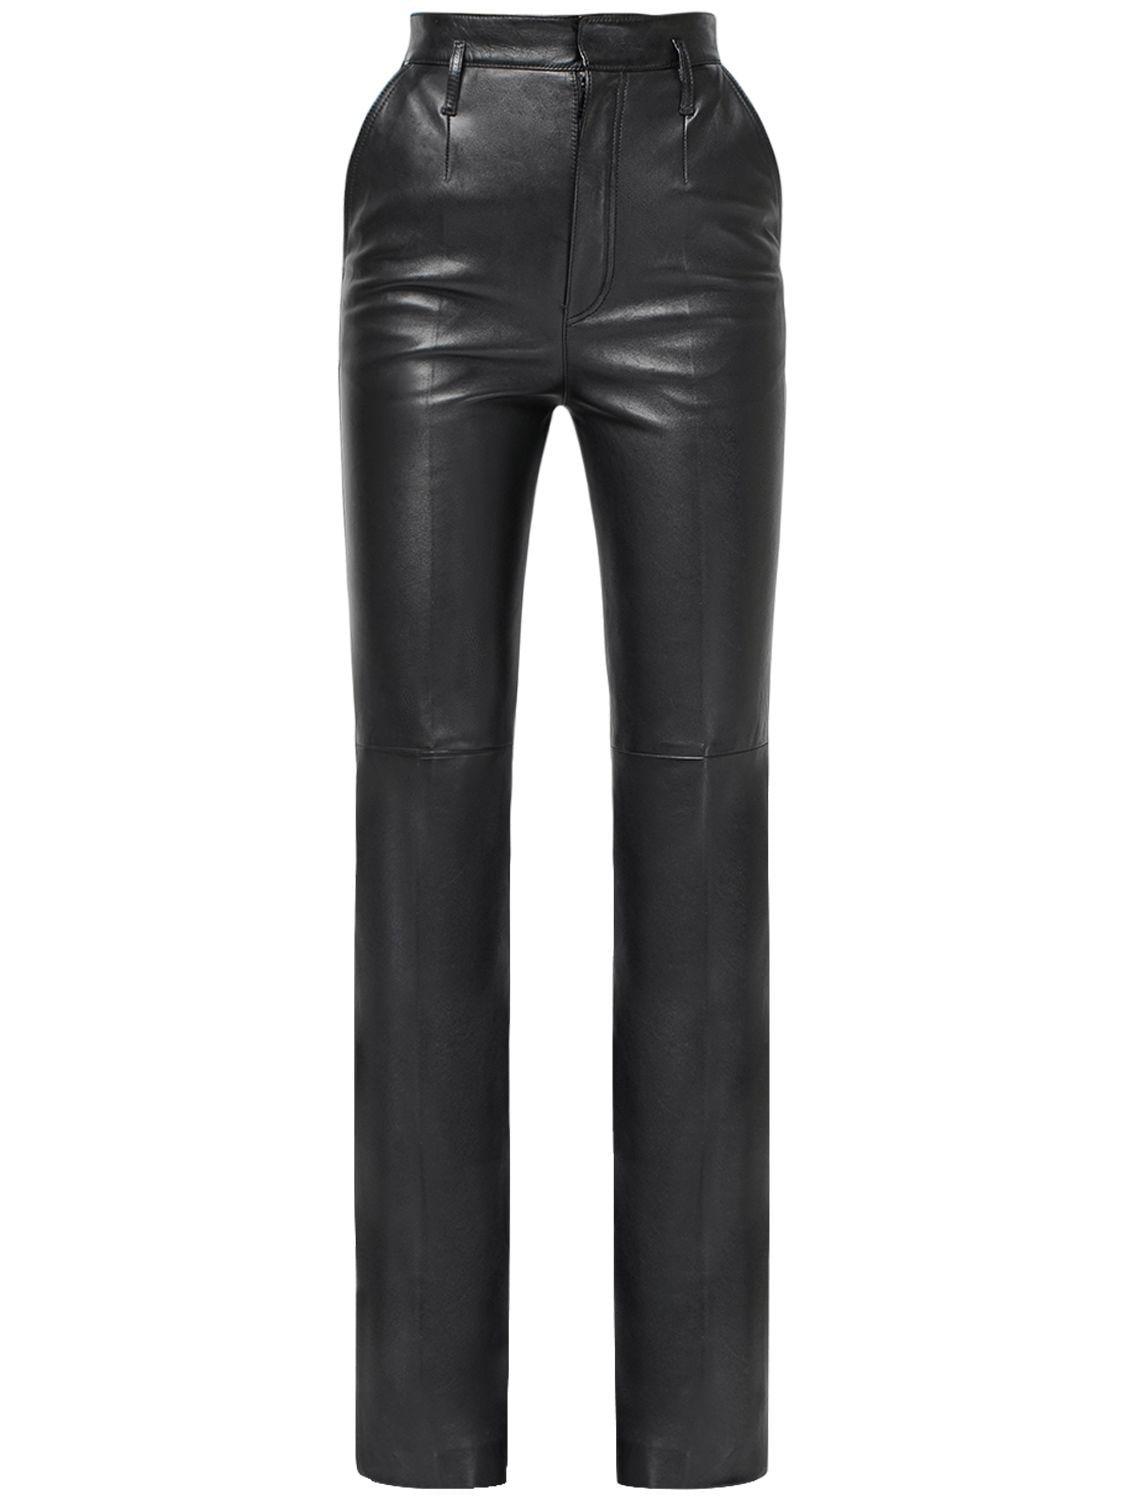 Saint Laurent High Waist Leather Pants in Gray | Lyst